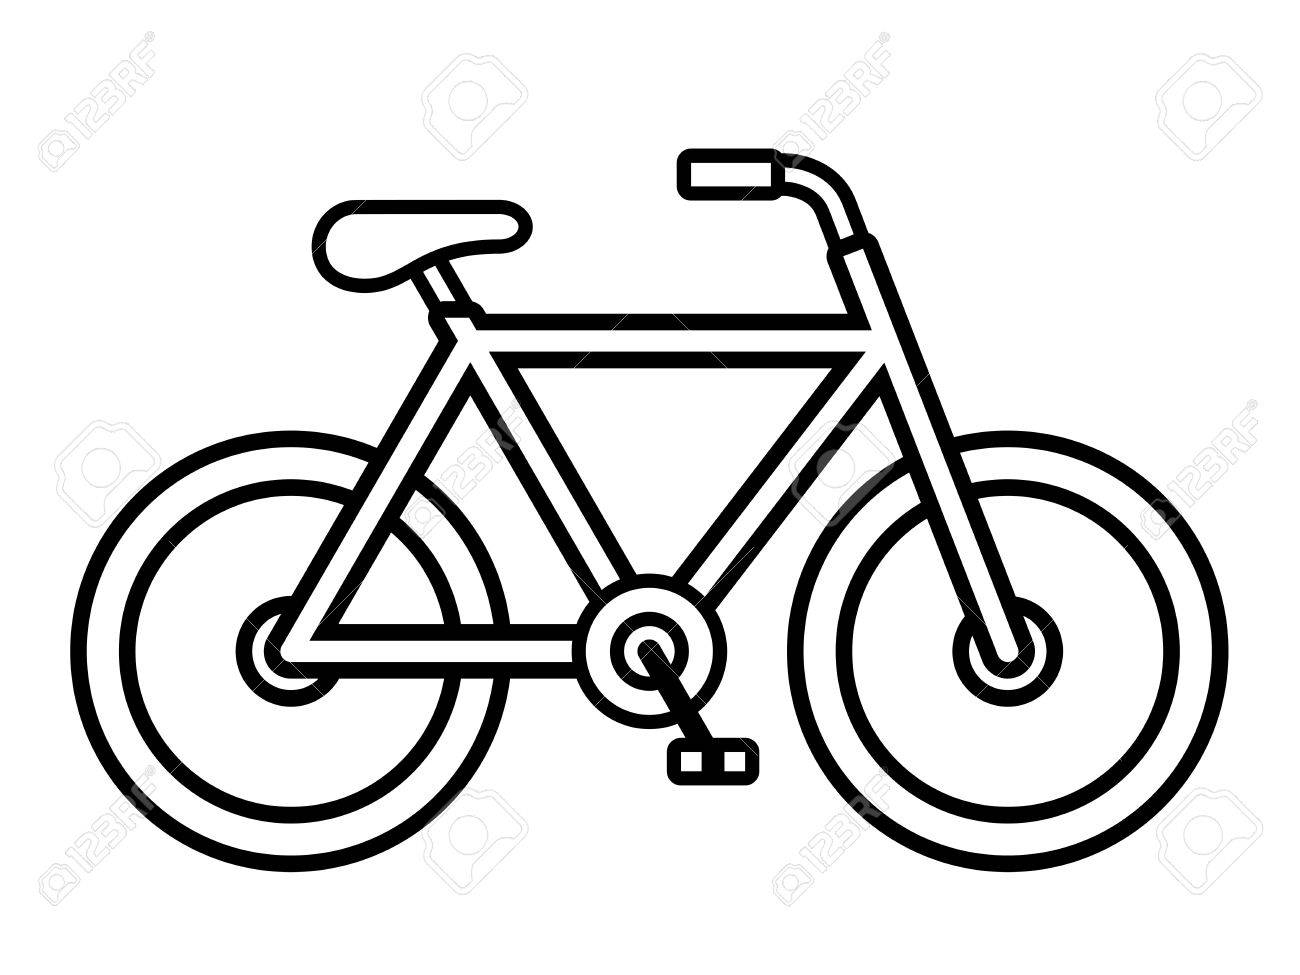 Biking clipart outline, Biking outline Transparent FREE for